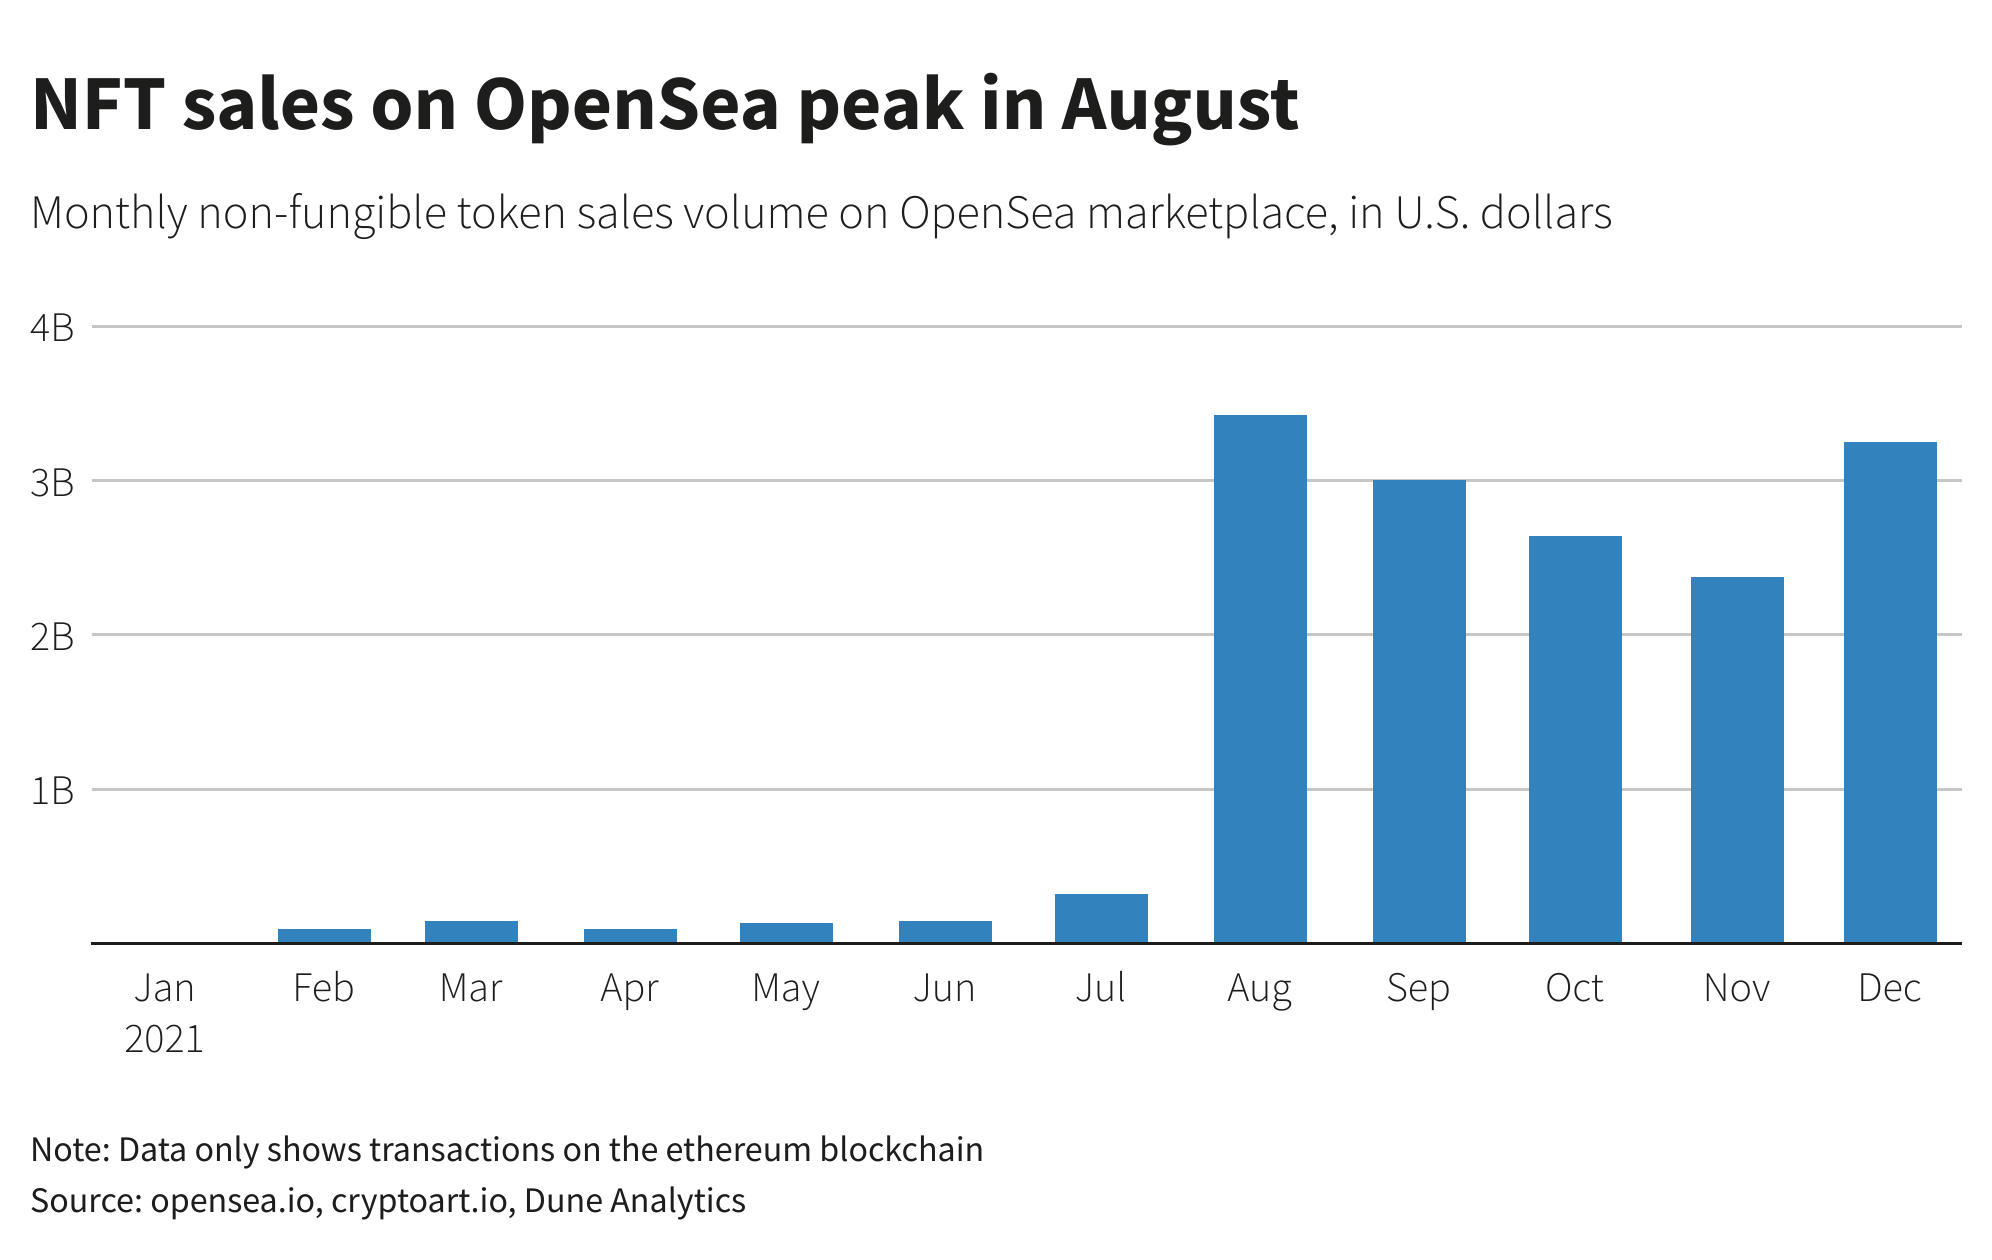 NFT sales on OpenSea